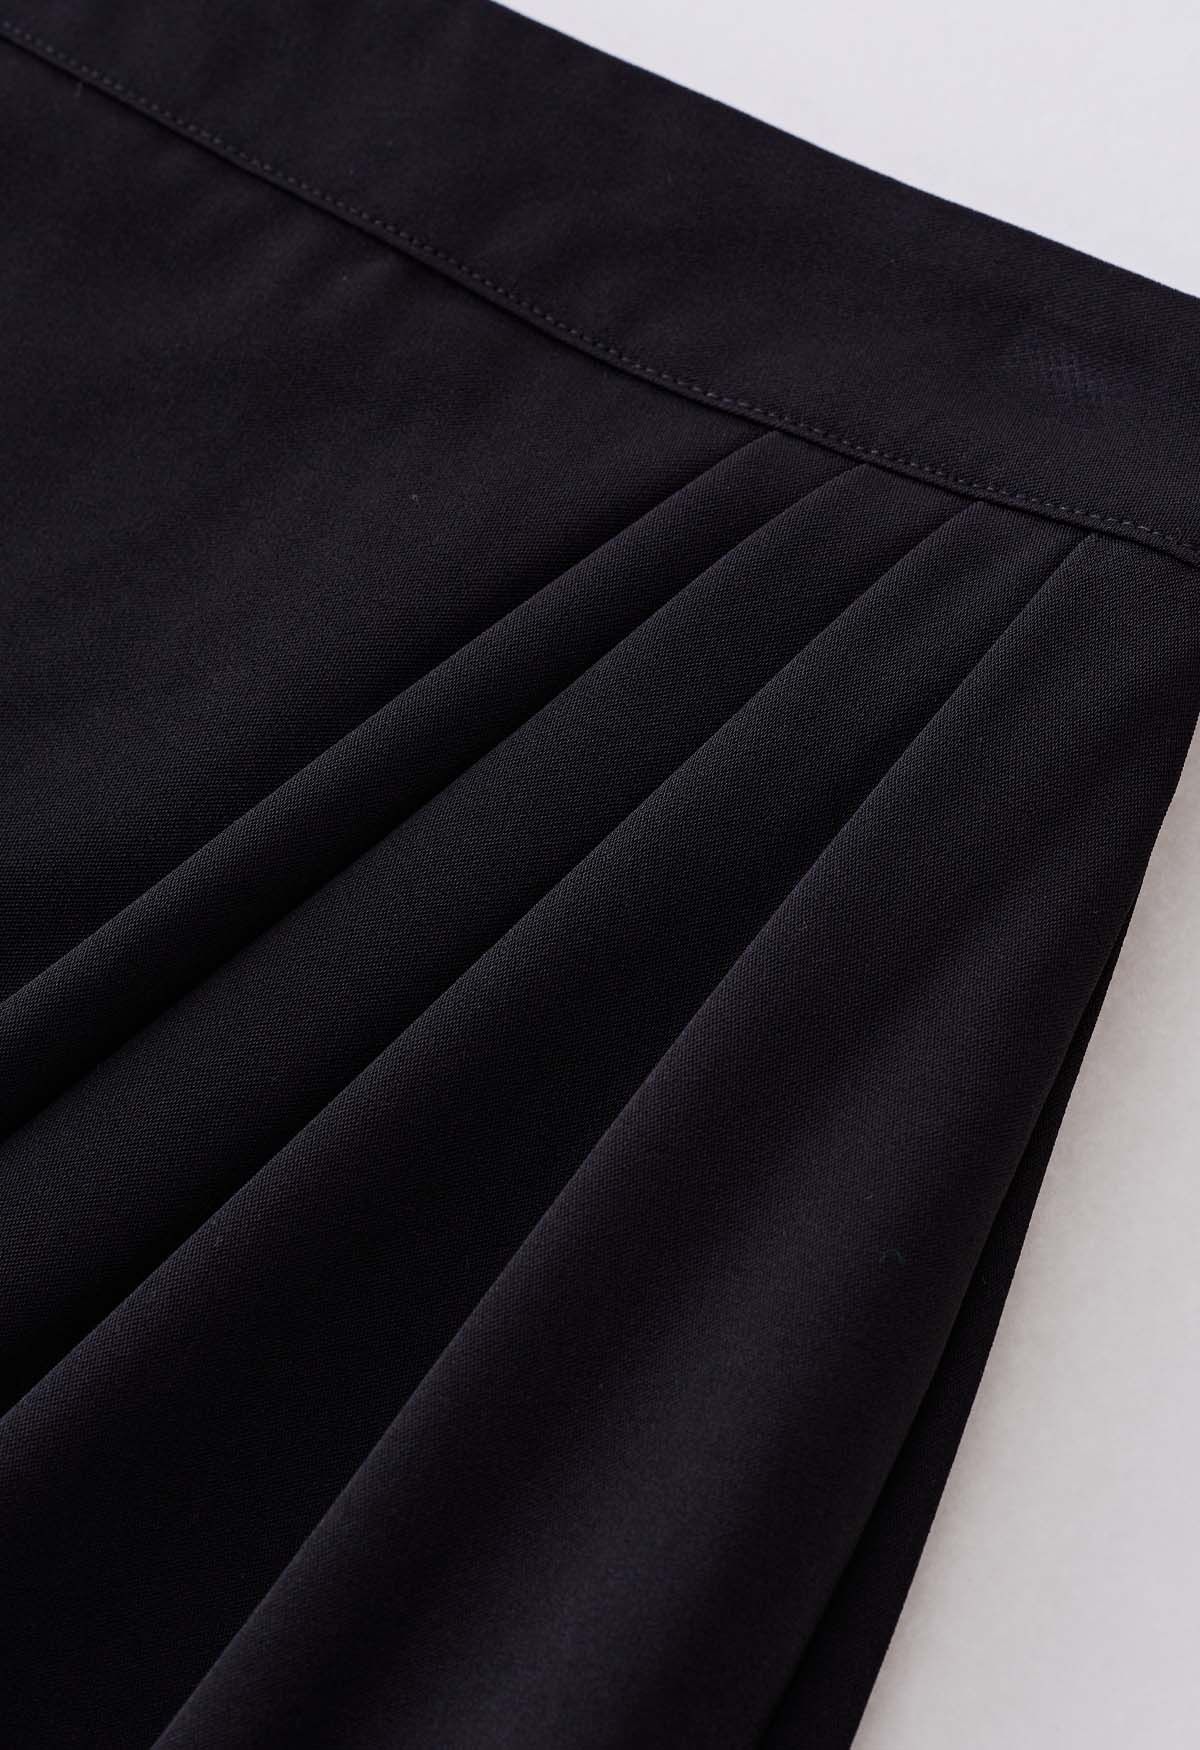 Side Pleated Tulip Midi Skirt in Black - Retro, Indie and Unique Fashion